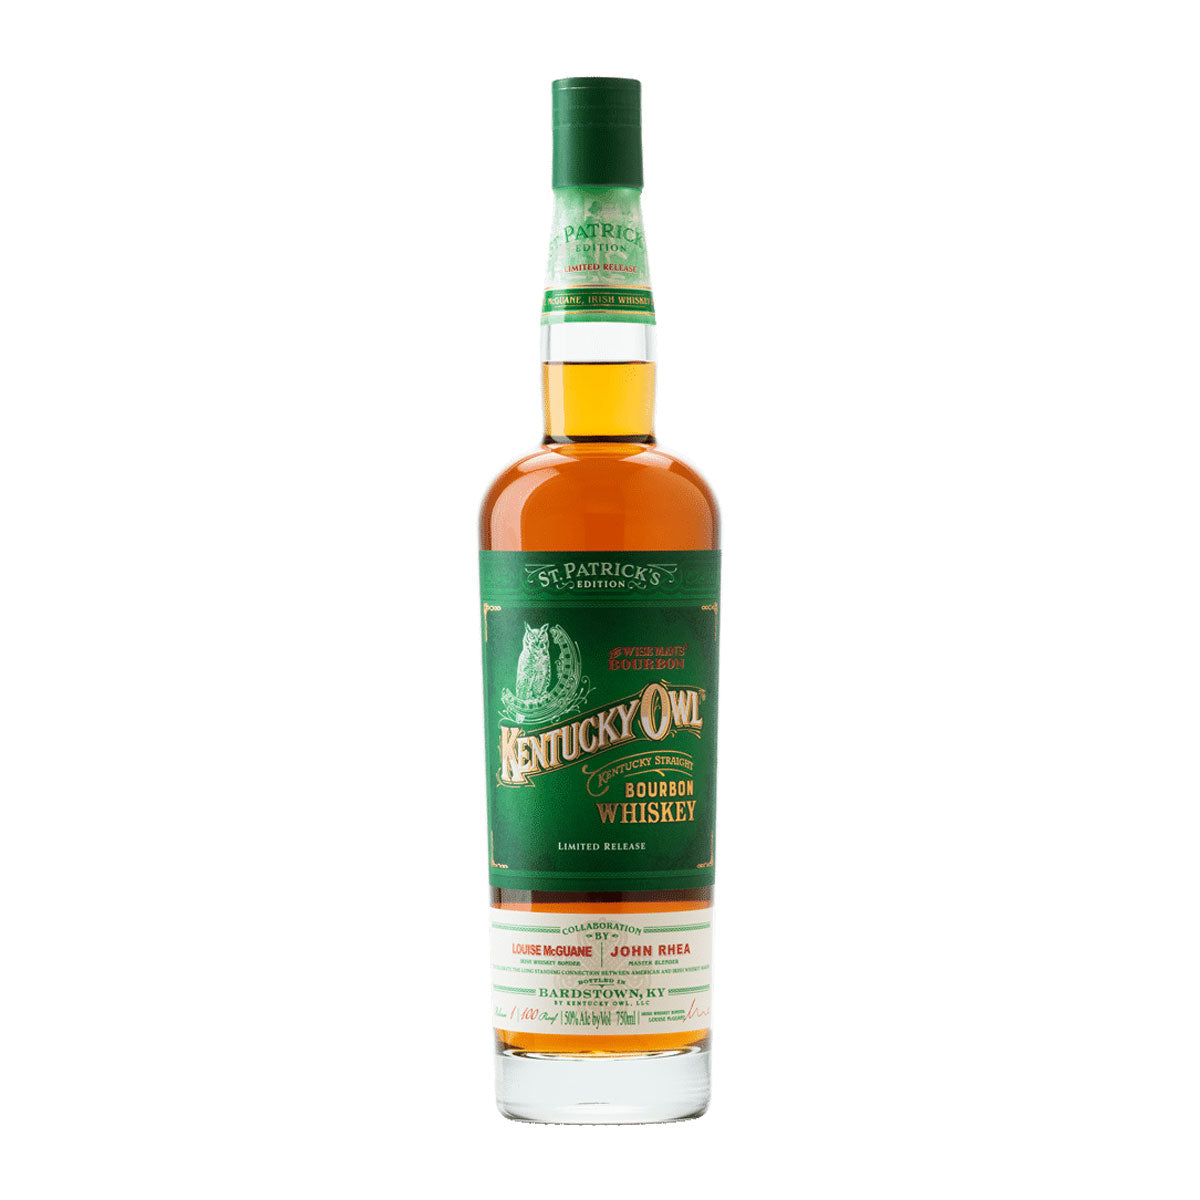 TAG Liquor Stores BC - Kentucky Owl St.Patricks Edition Bourbon Whiskey 750ml